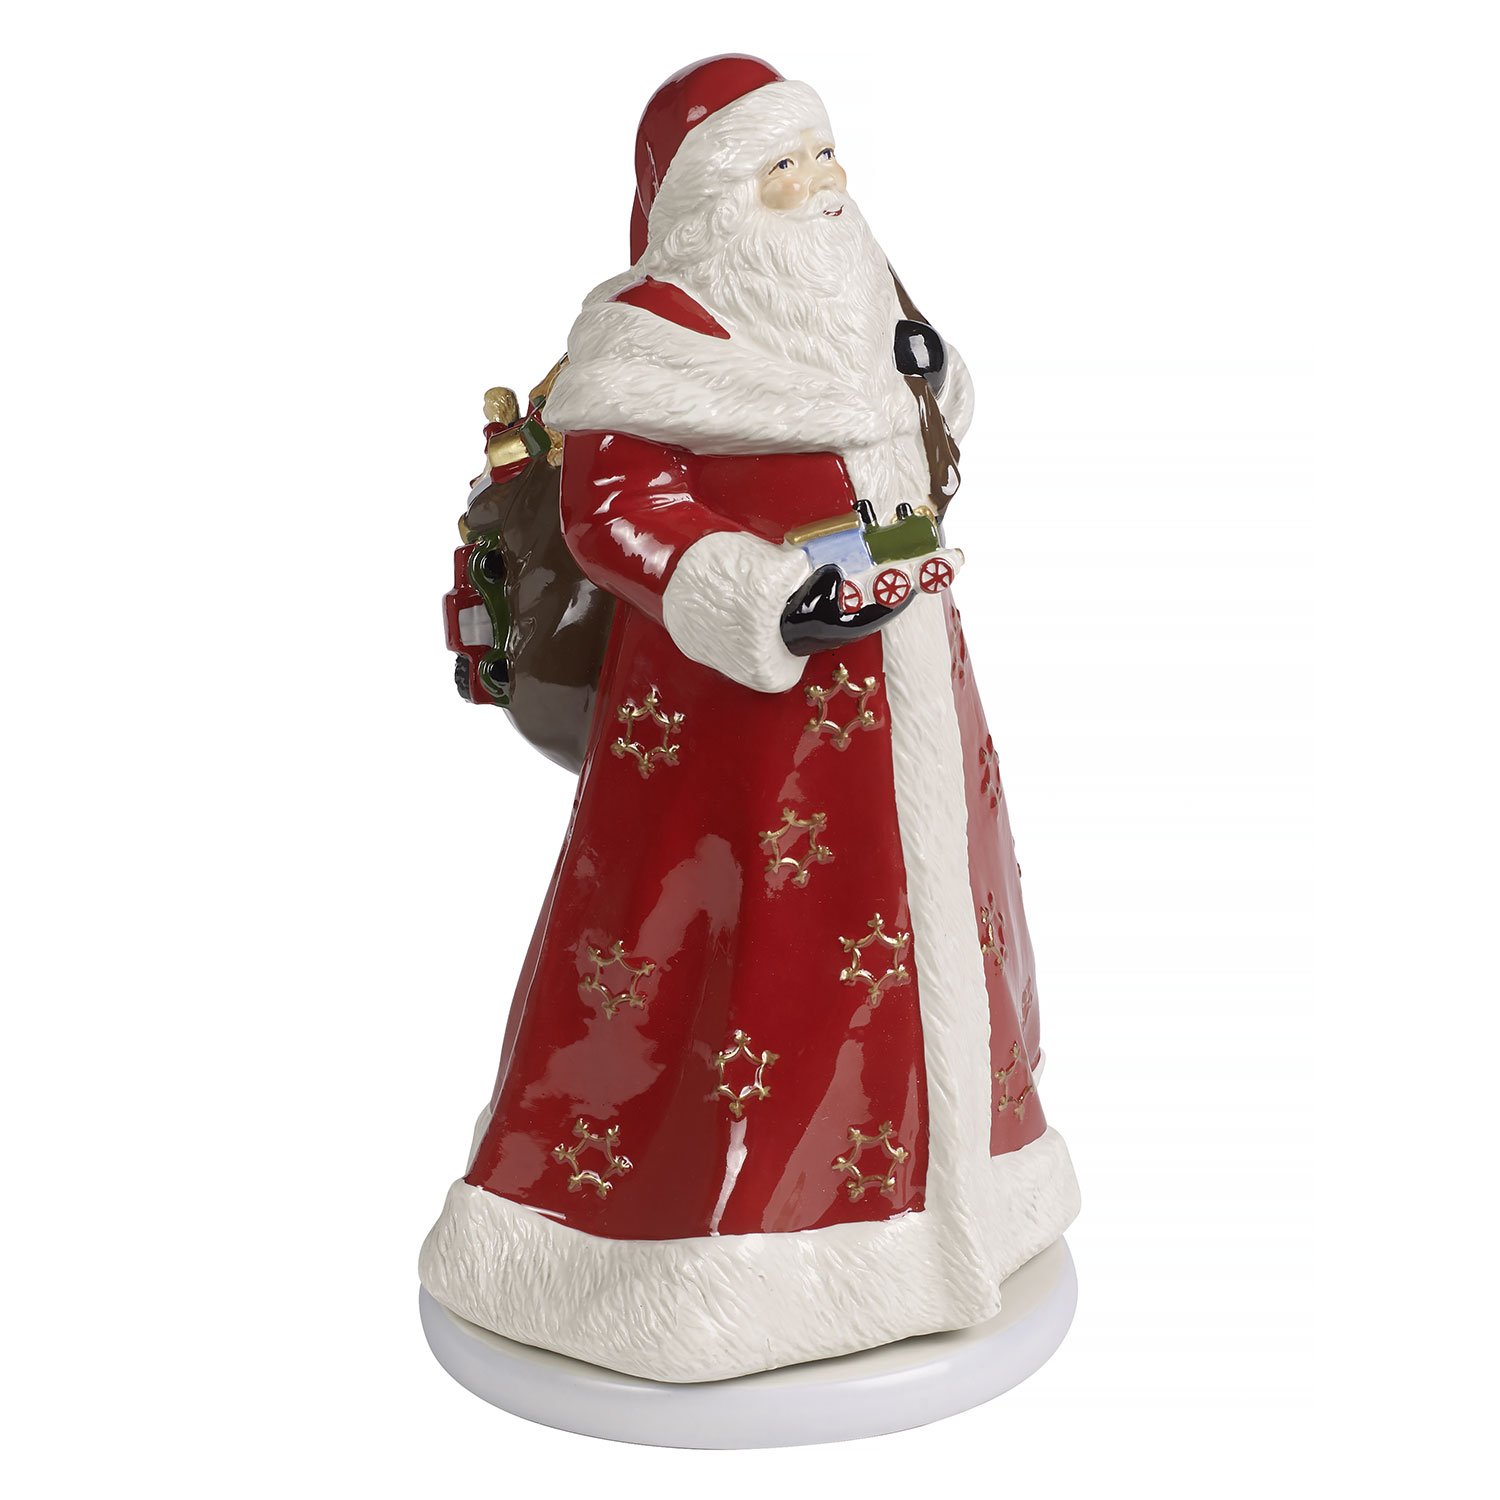 Christmas Toy's Memory Фигурка музыкальная "Дед Мороз с подарками" 34 см Villeroy & Boch
https://spb.v-b.ru
г.Санкт-Петербург
eshop@v-b.spb.ru
+7(812)3801977